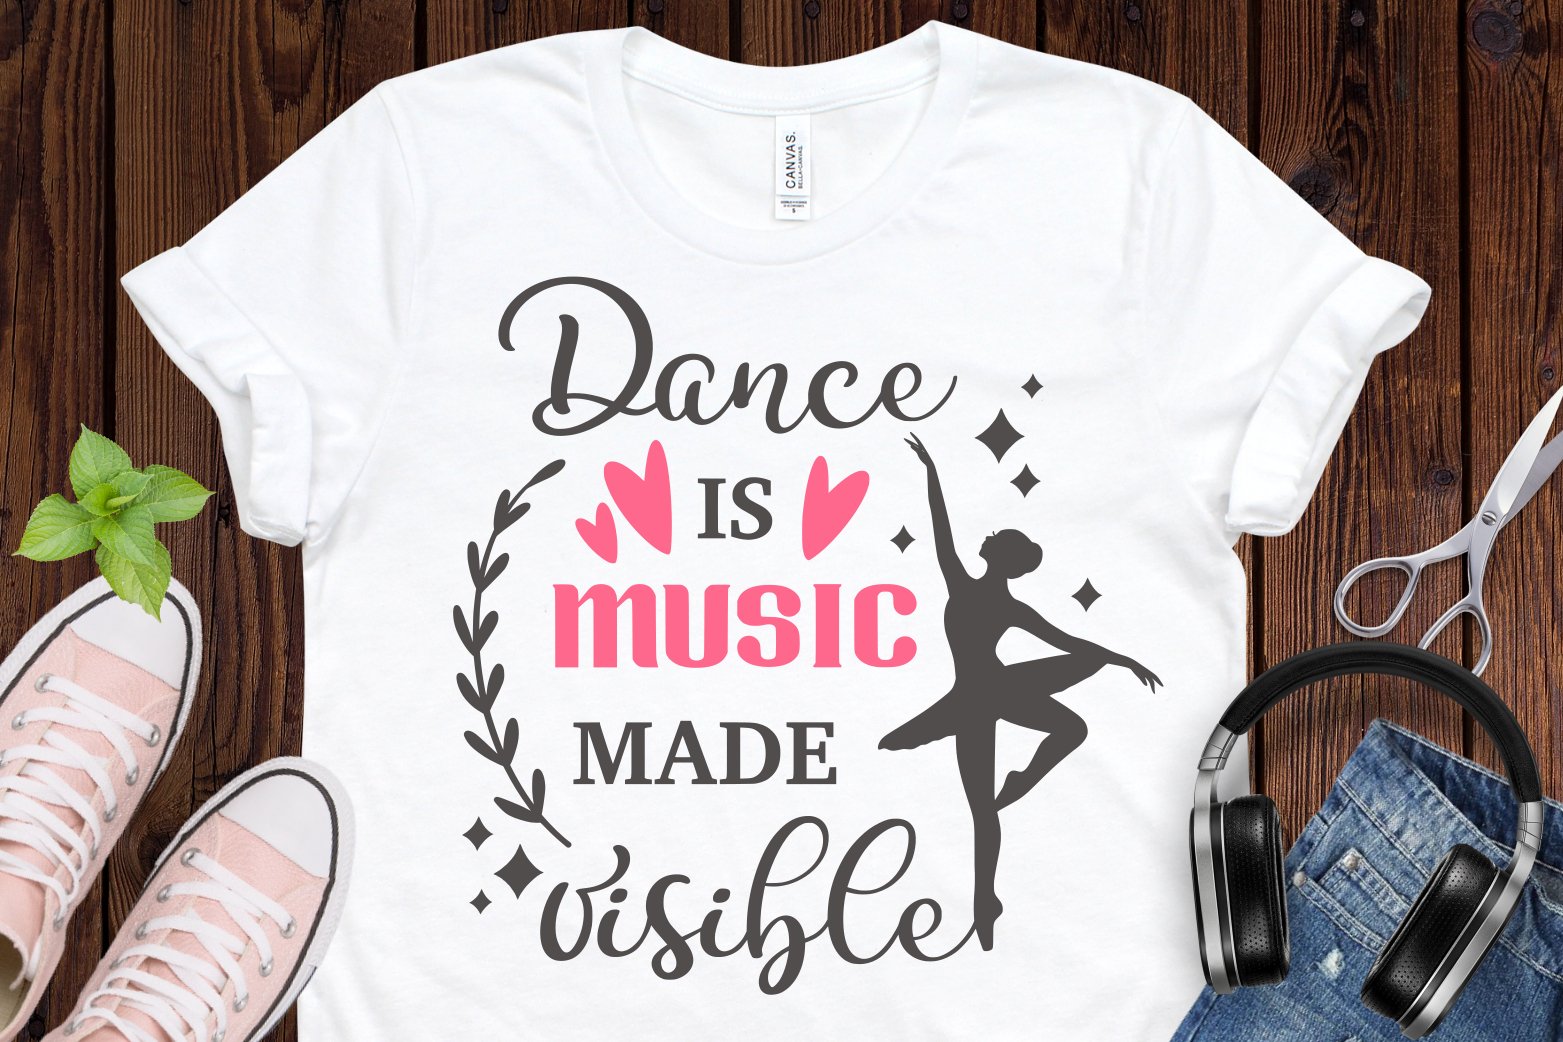 Dances build music.